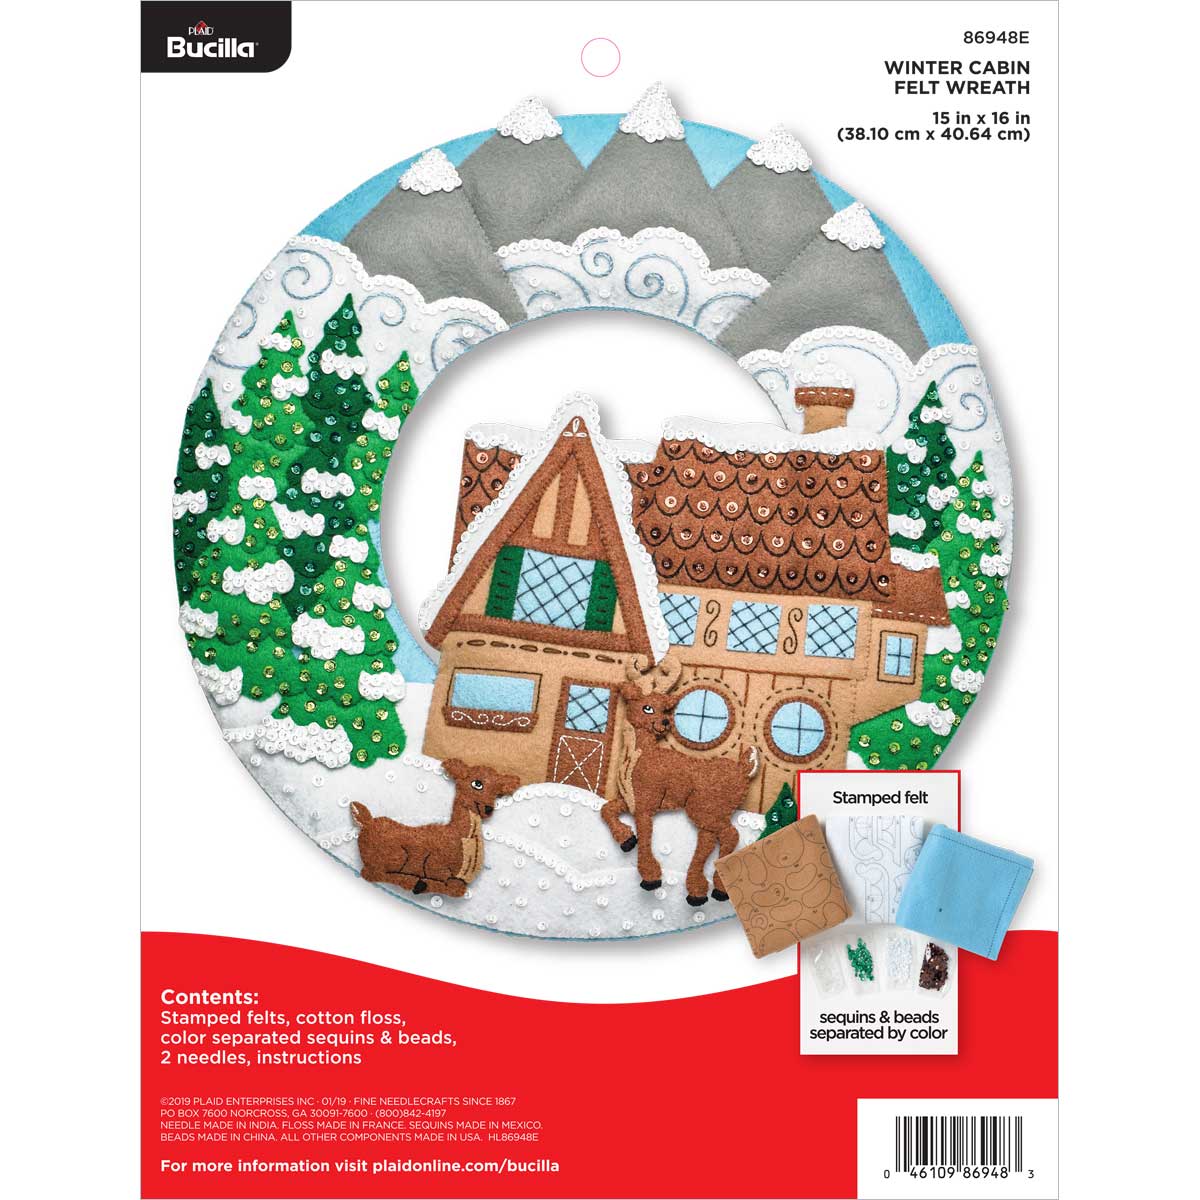 Bucilla ® Seasonal - Felt - Home Decor - Winter Cabin Wreath - 86948E